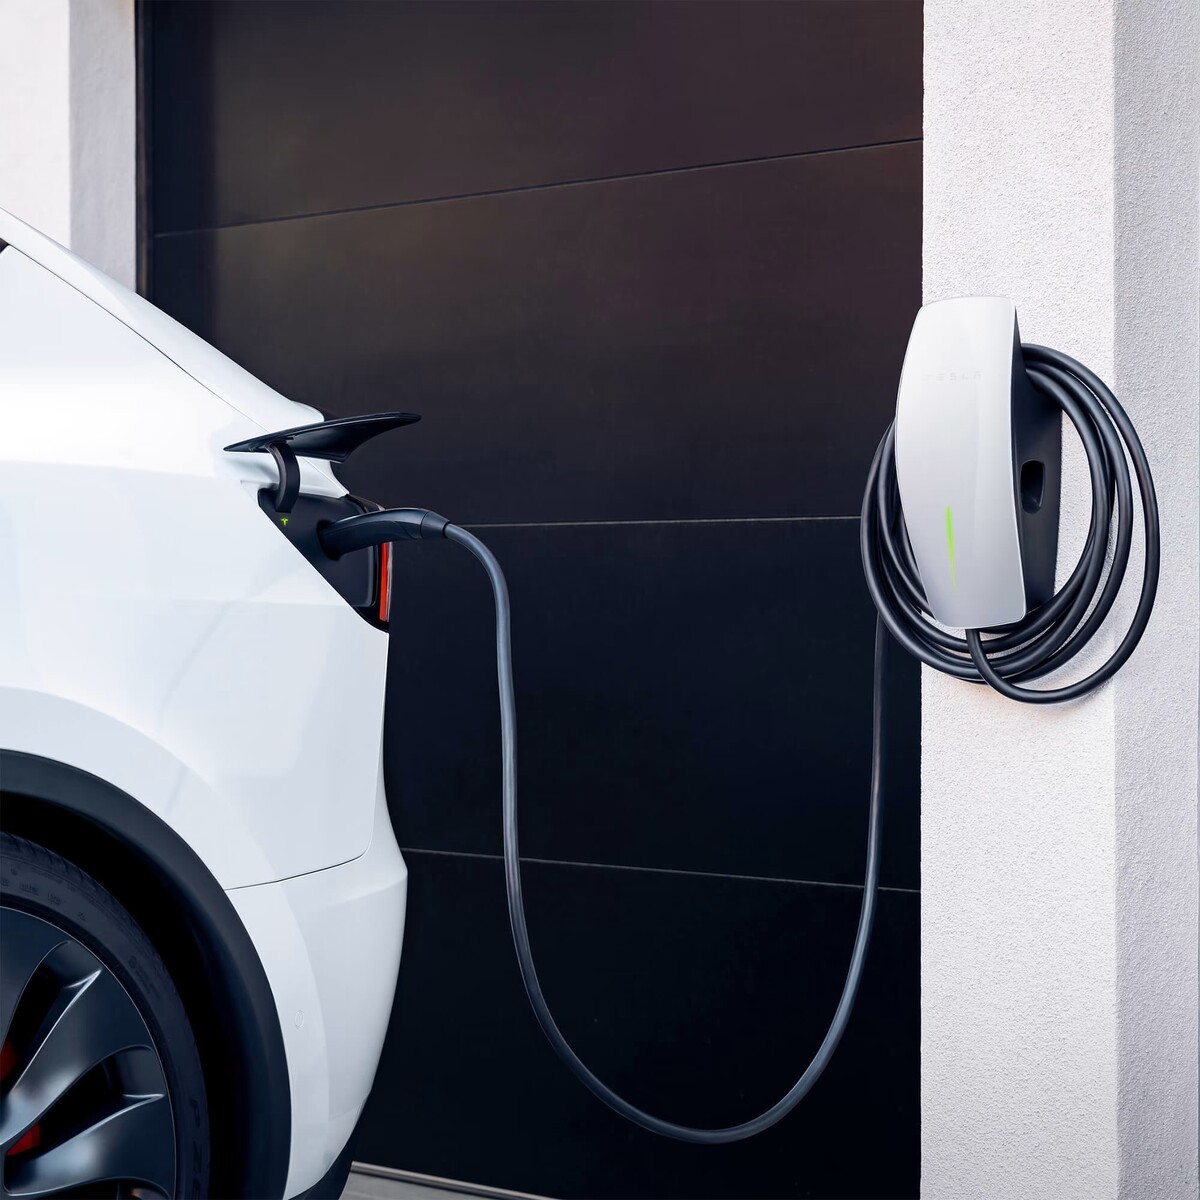 Tesla Magic Dock For Home Charging: Meet The Tesla Universal Wall Connector!  